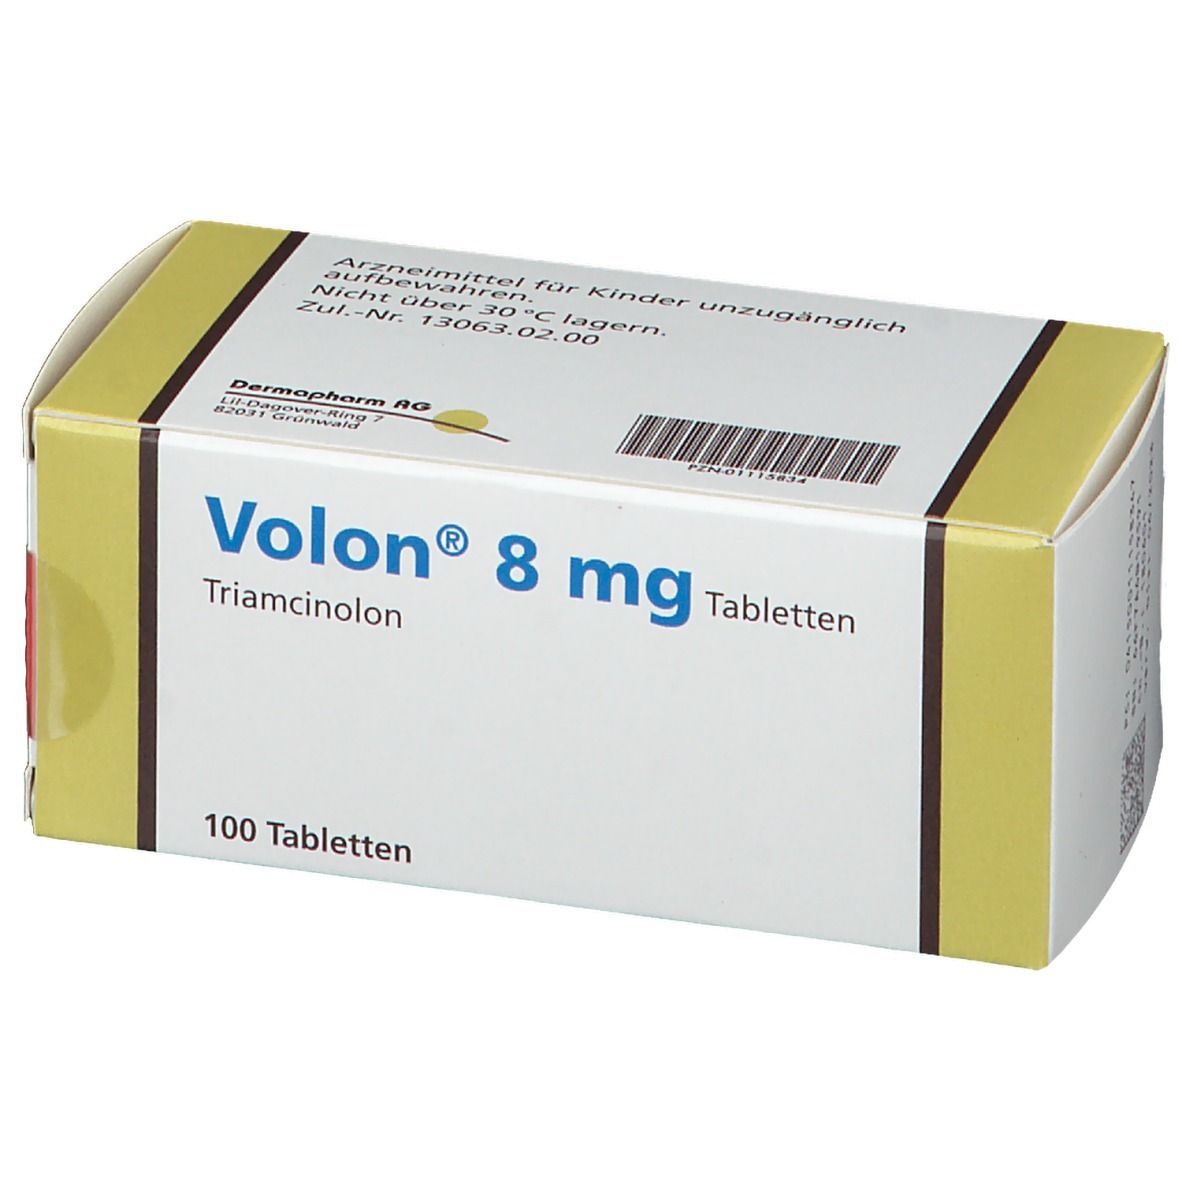 Volon®8 mg